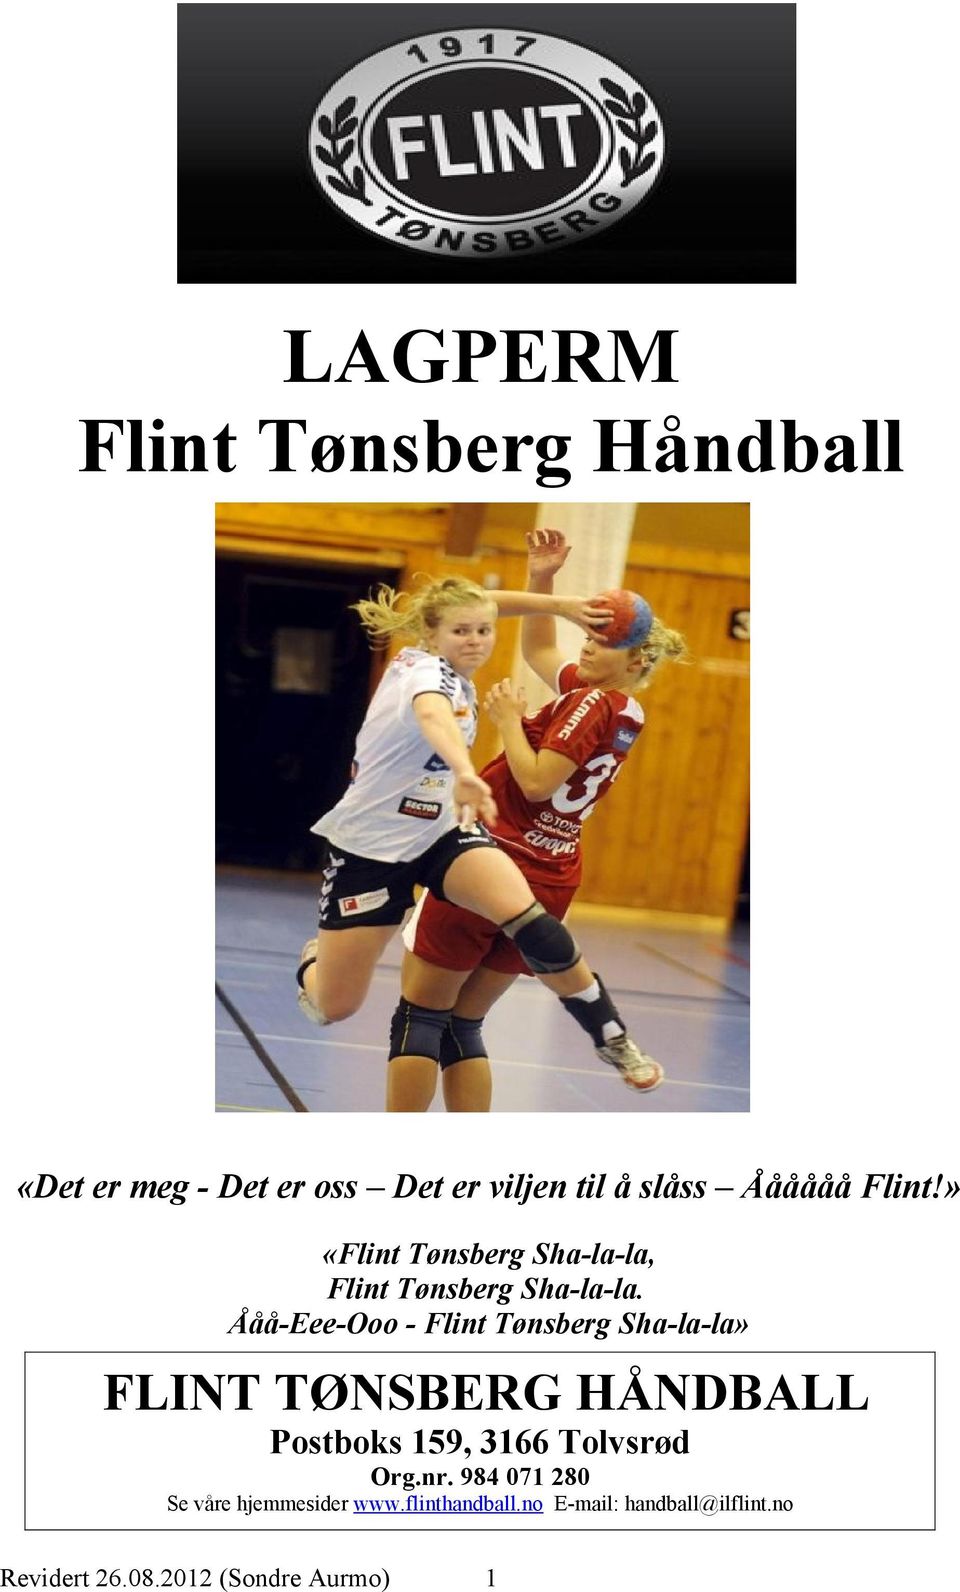 Ååå-Eee-Ooo - Flint Tønsberg Sha-la-la» FLINT TØNSBERG HÅNDBALL Postboks 159, 3166 Tolvsrød